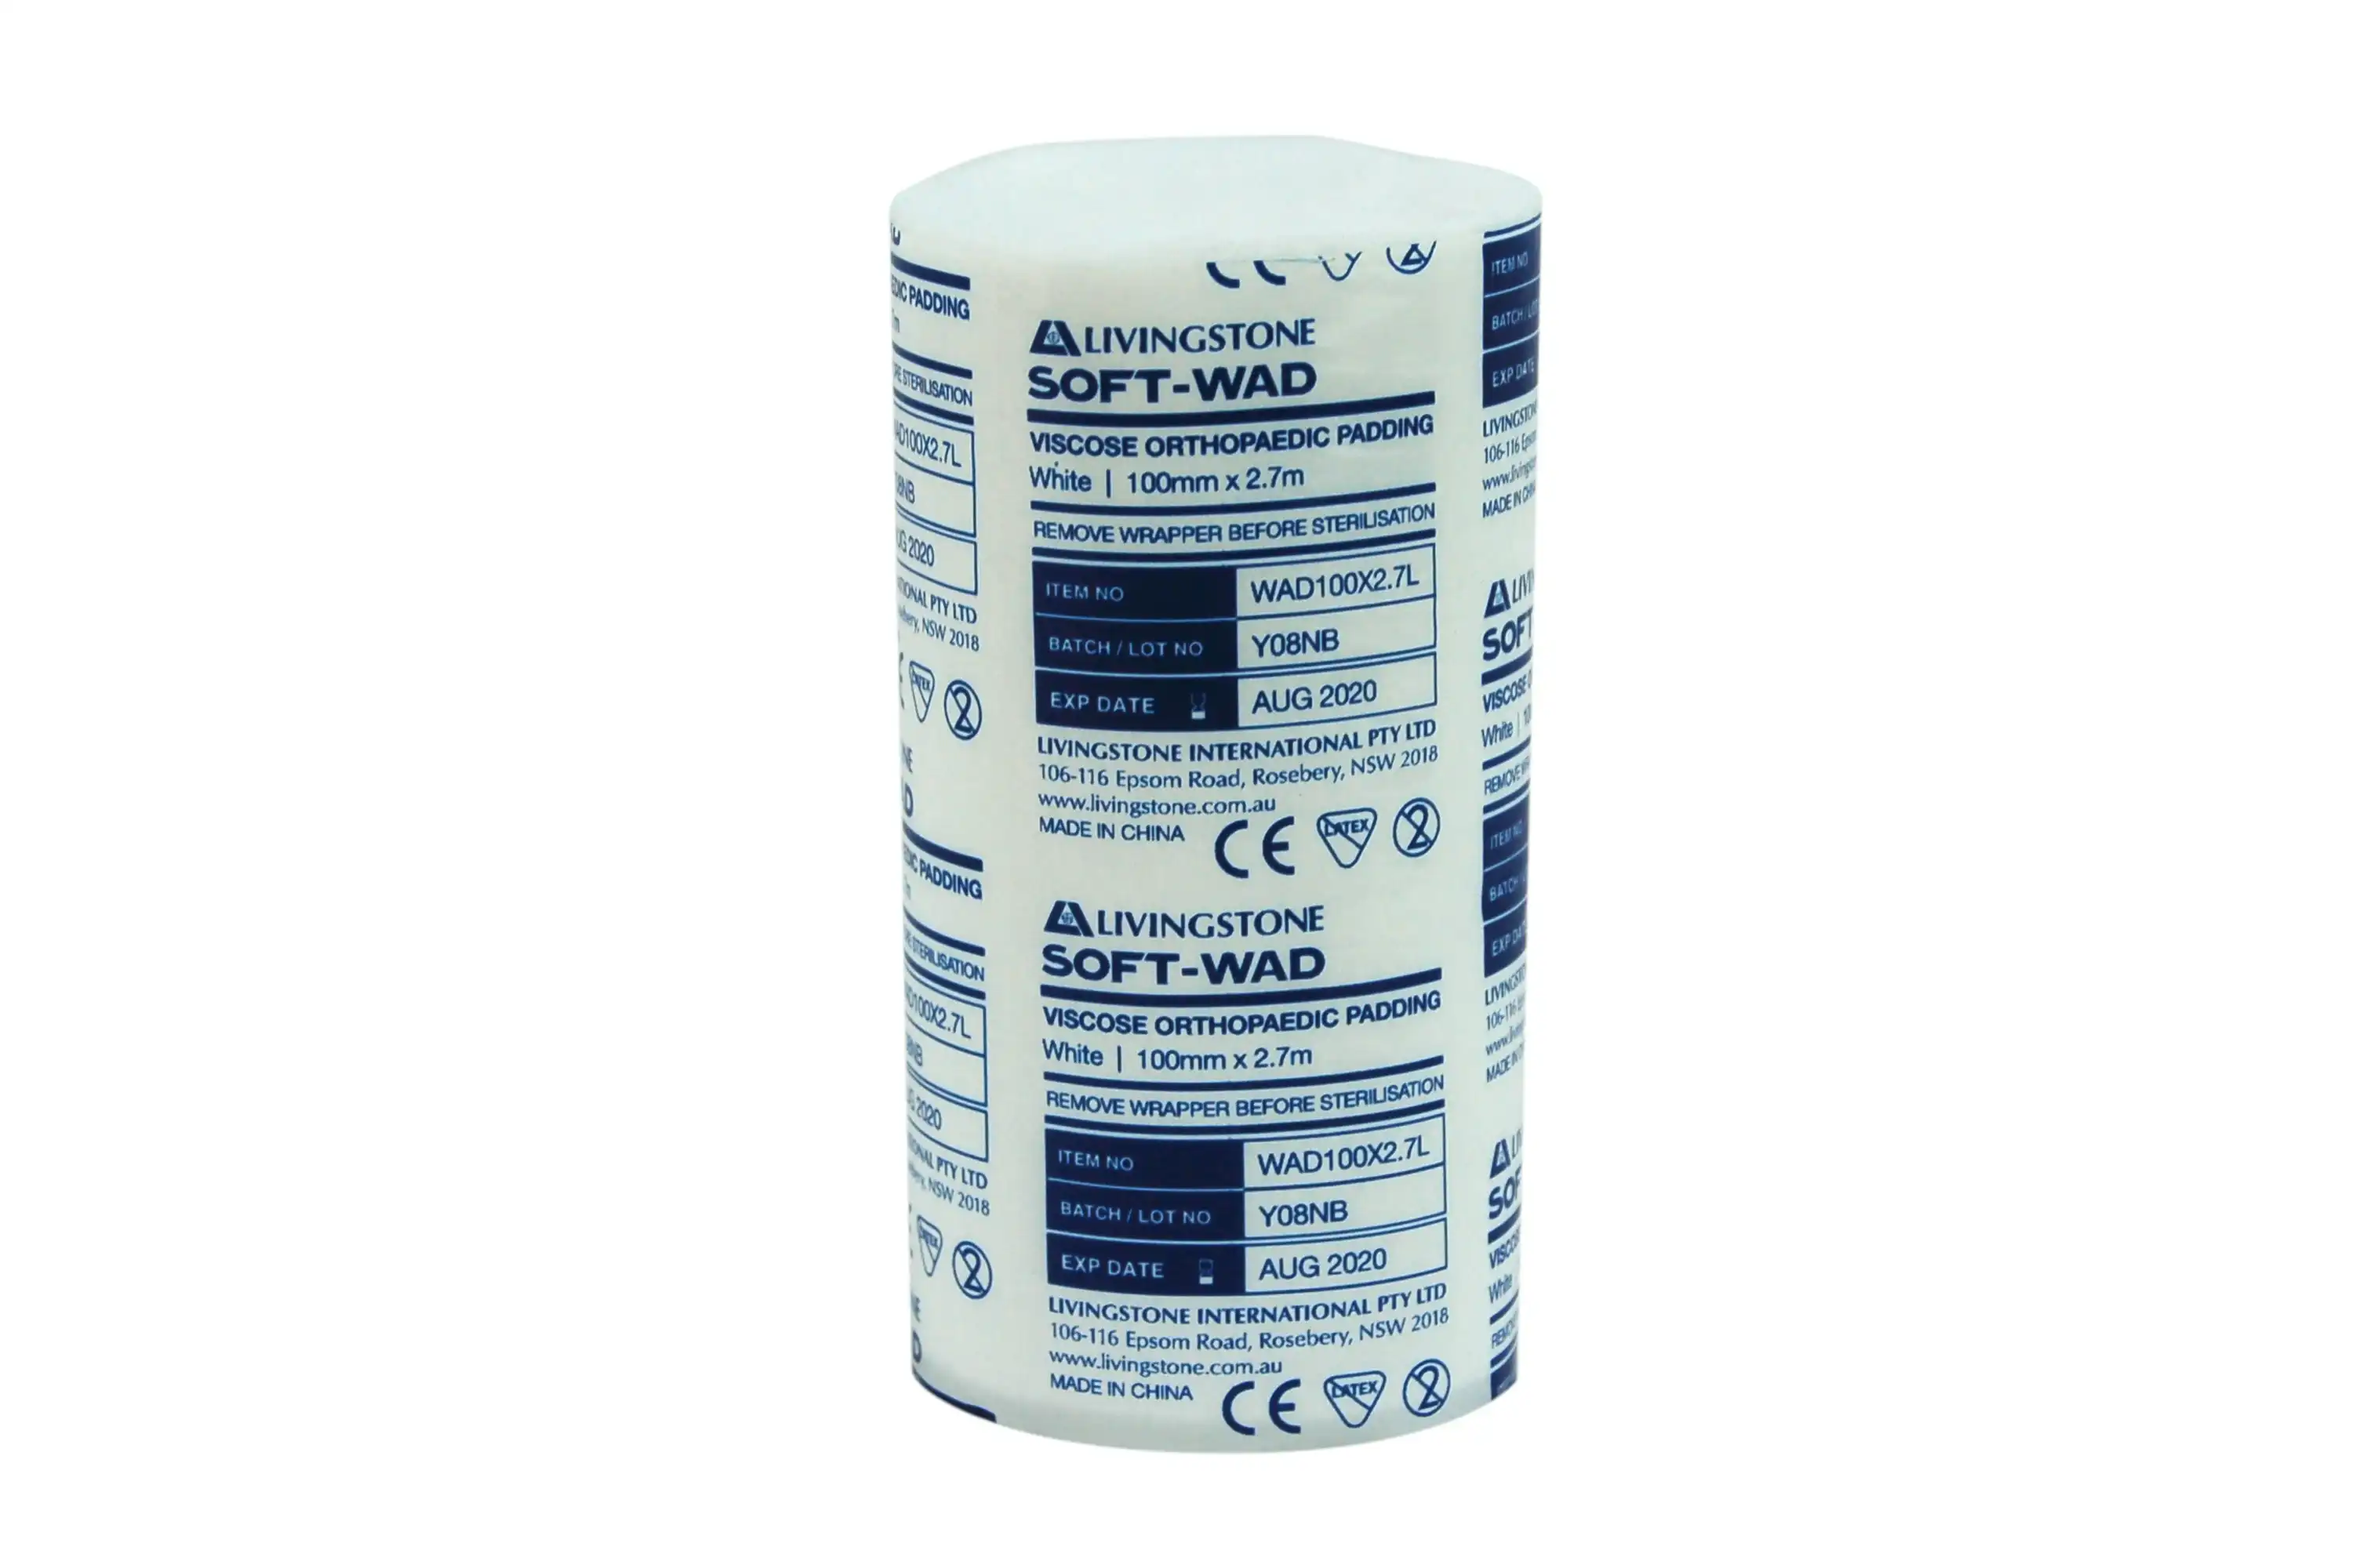 Livingstone Soft-Wad Orthopaedic Undercast Padding Bandage 10cm x 2.7m Non-Sterile Natural White